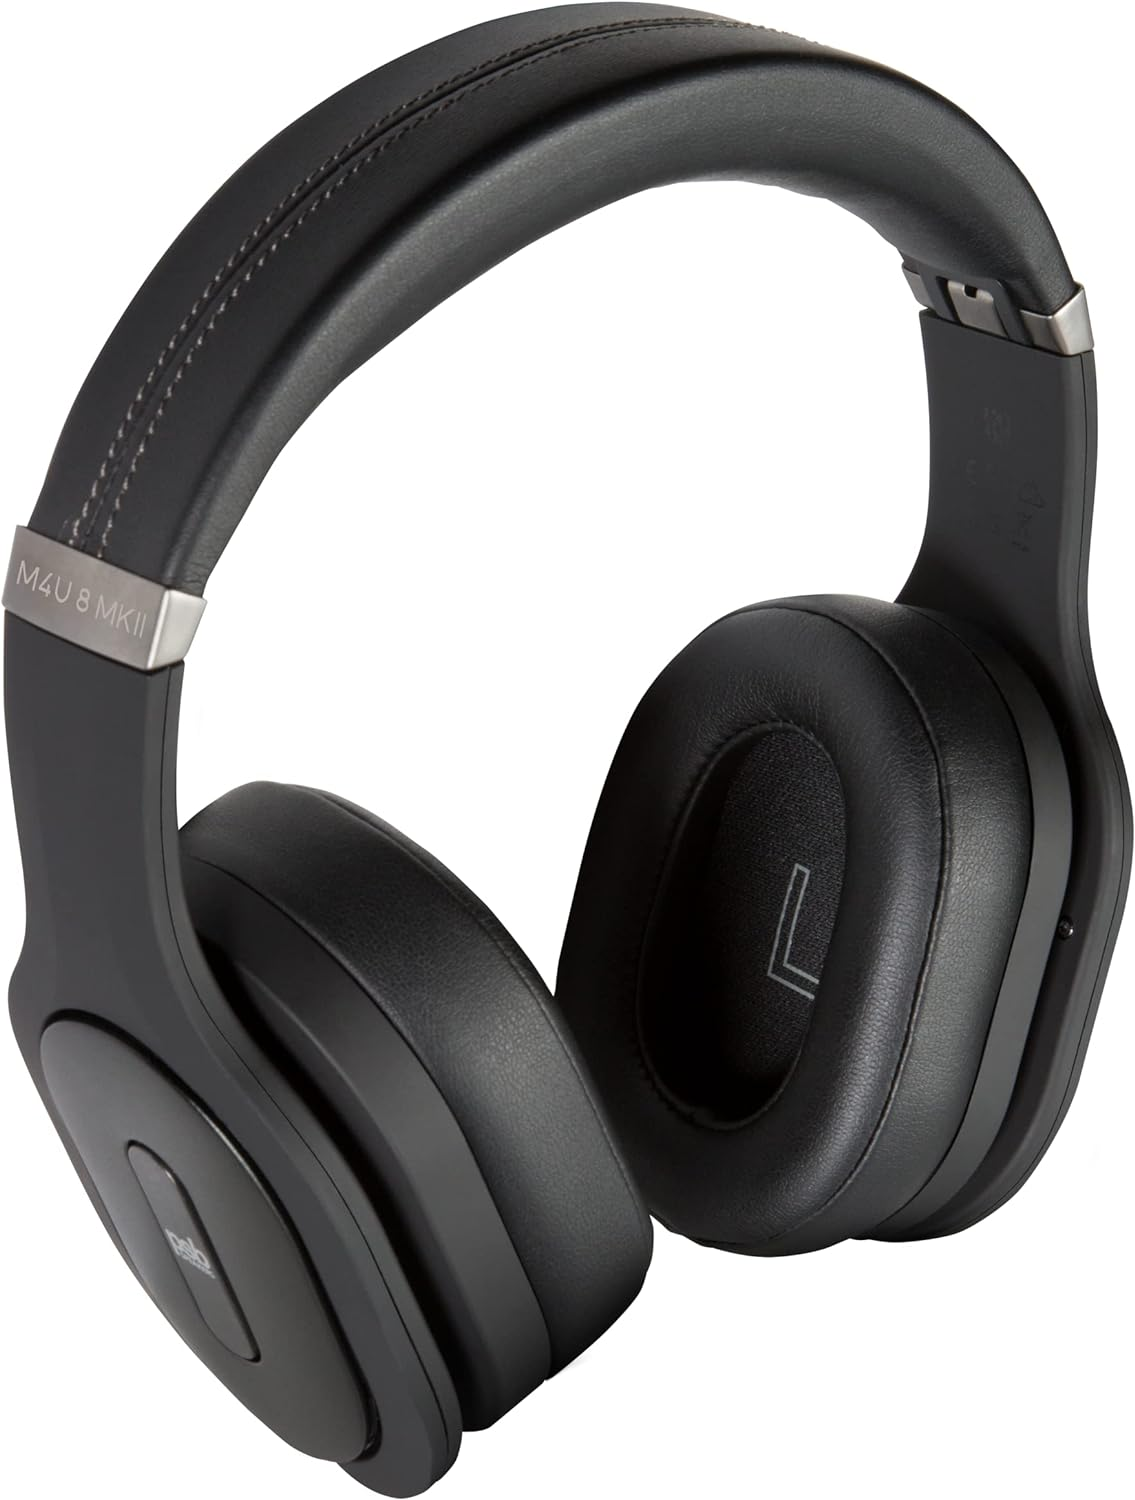 PSB Speakers M4U 8 MKII On-Ear Wireless Noise Cancelling Bluetooth Headphones - Black
